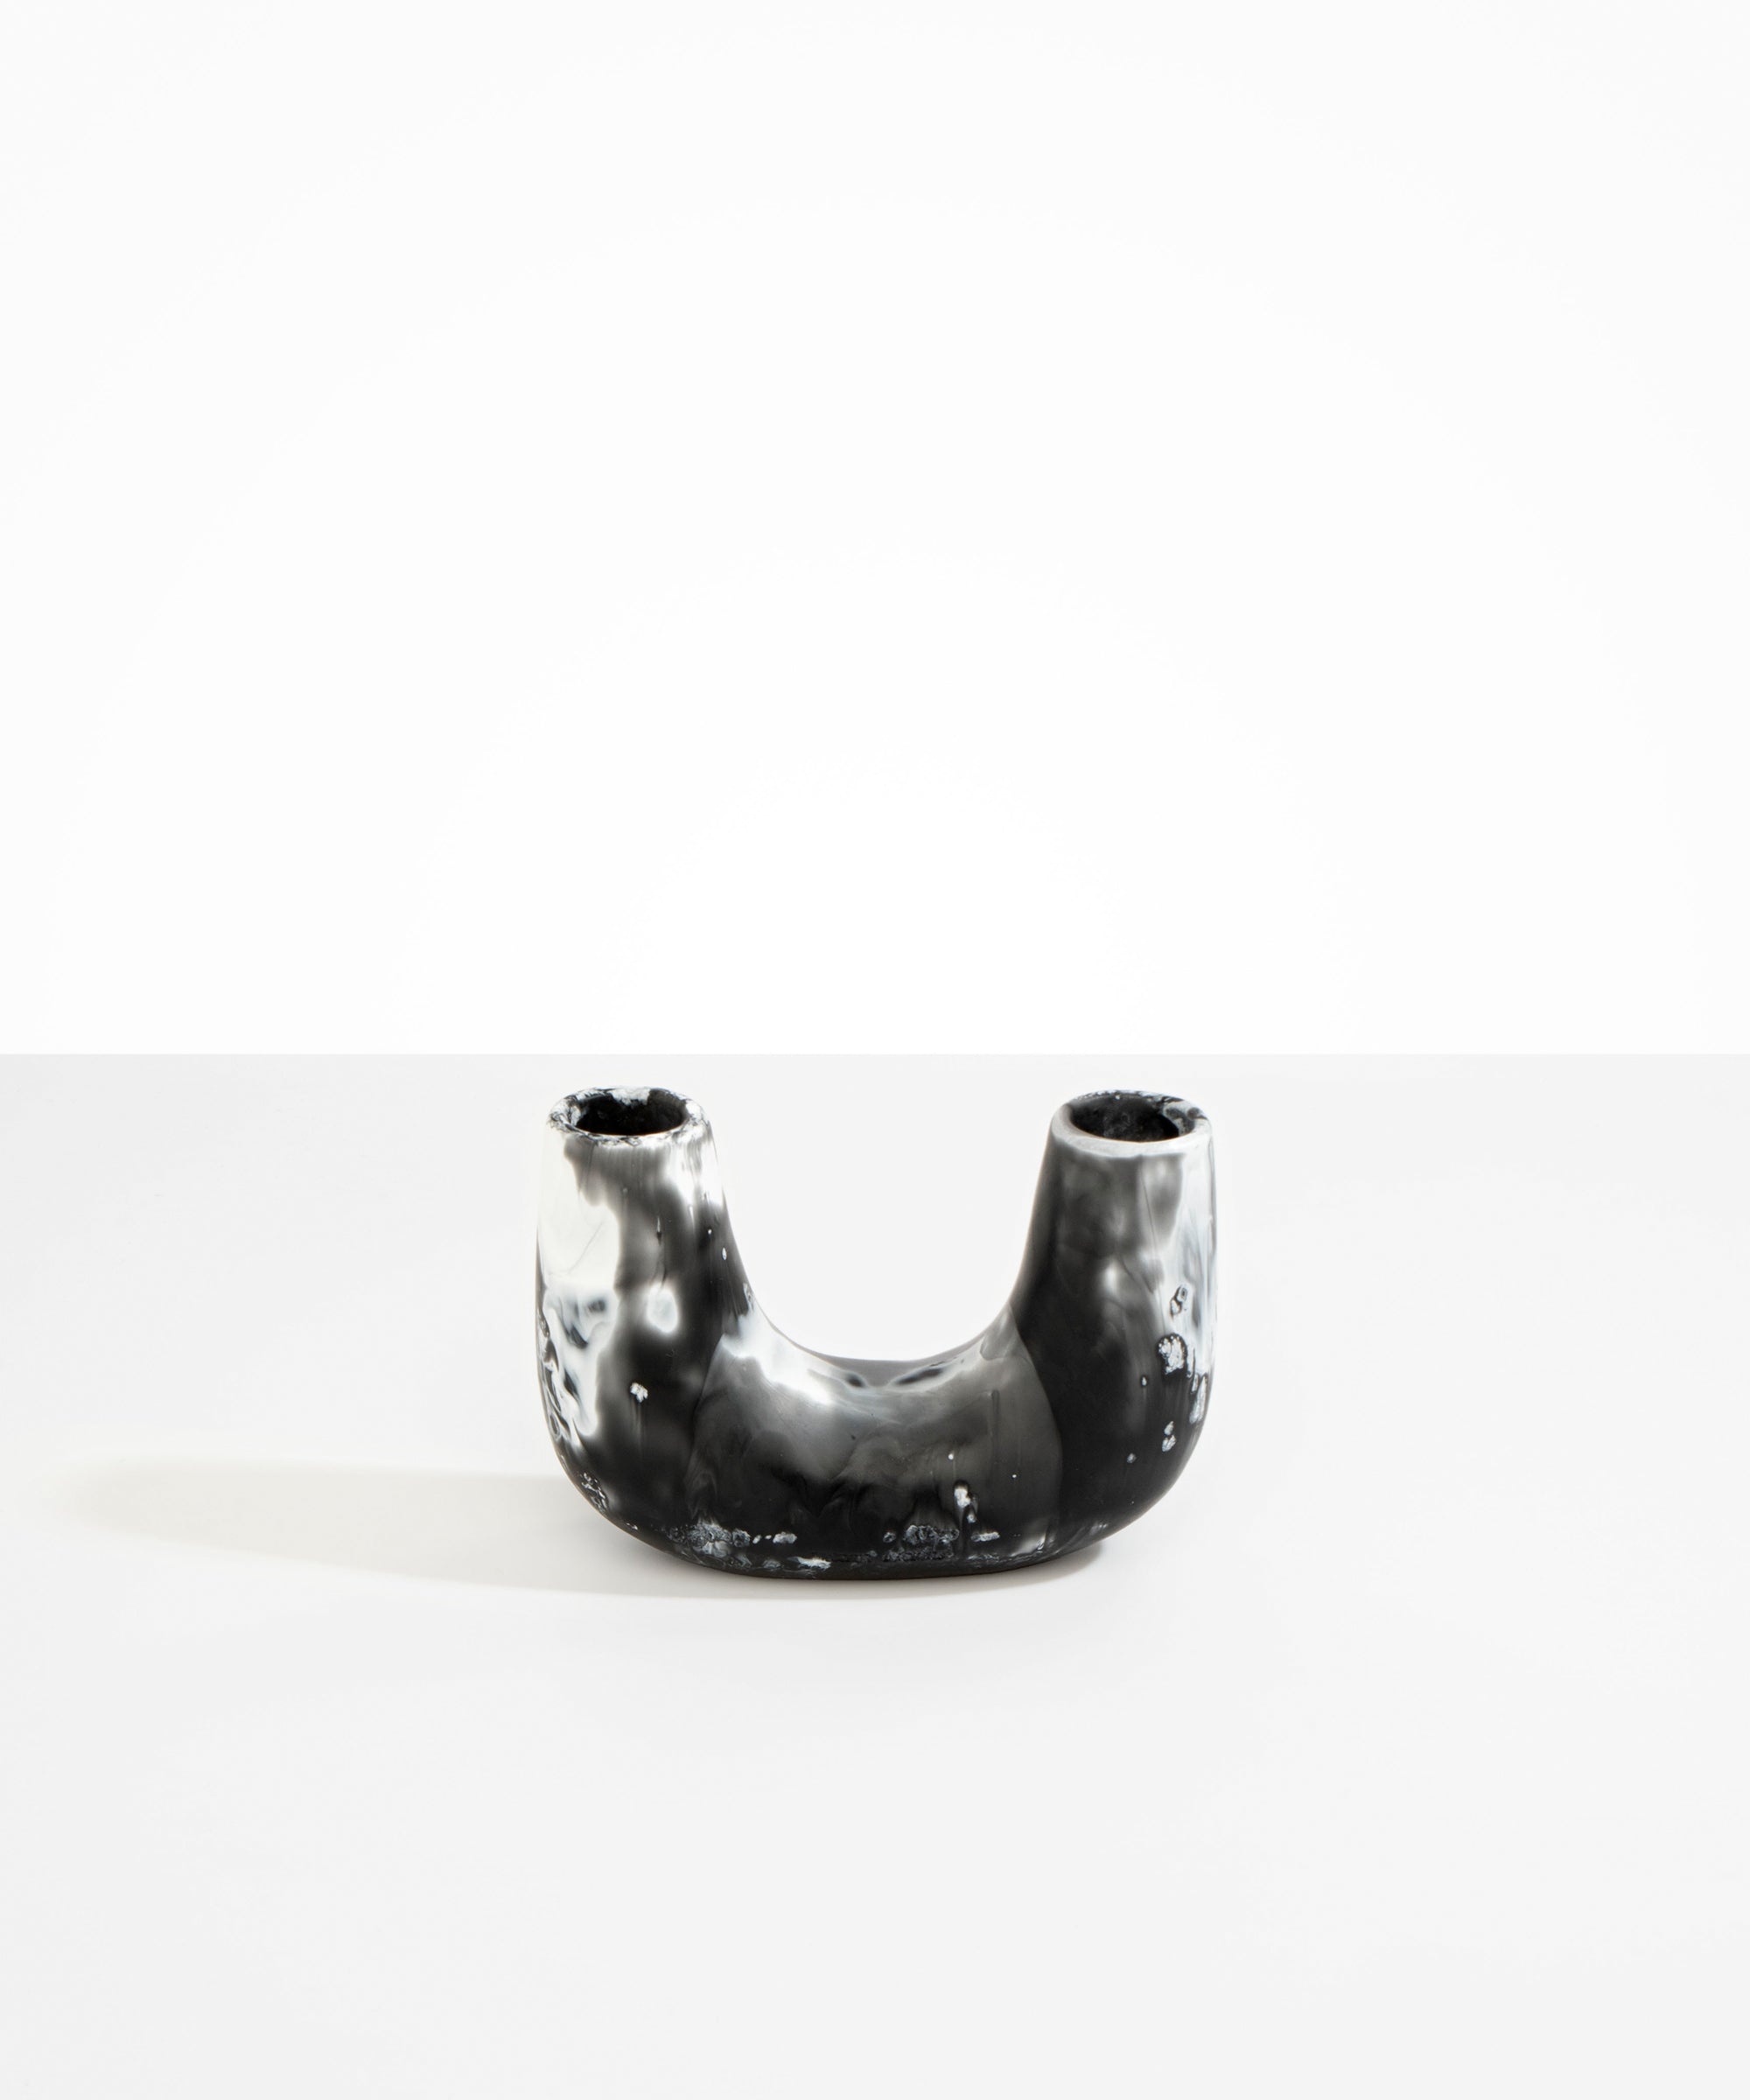 Dinosaur Designs Small Branch Vase Vases in Black Marble color resin